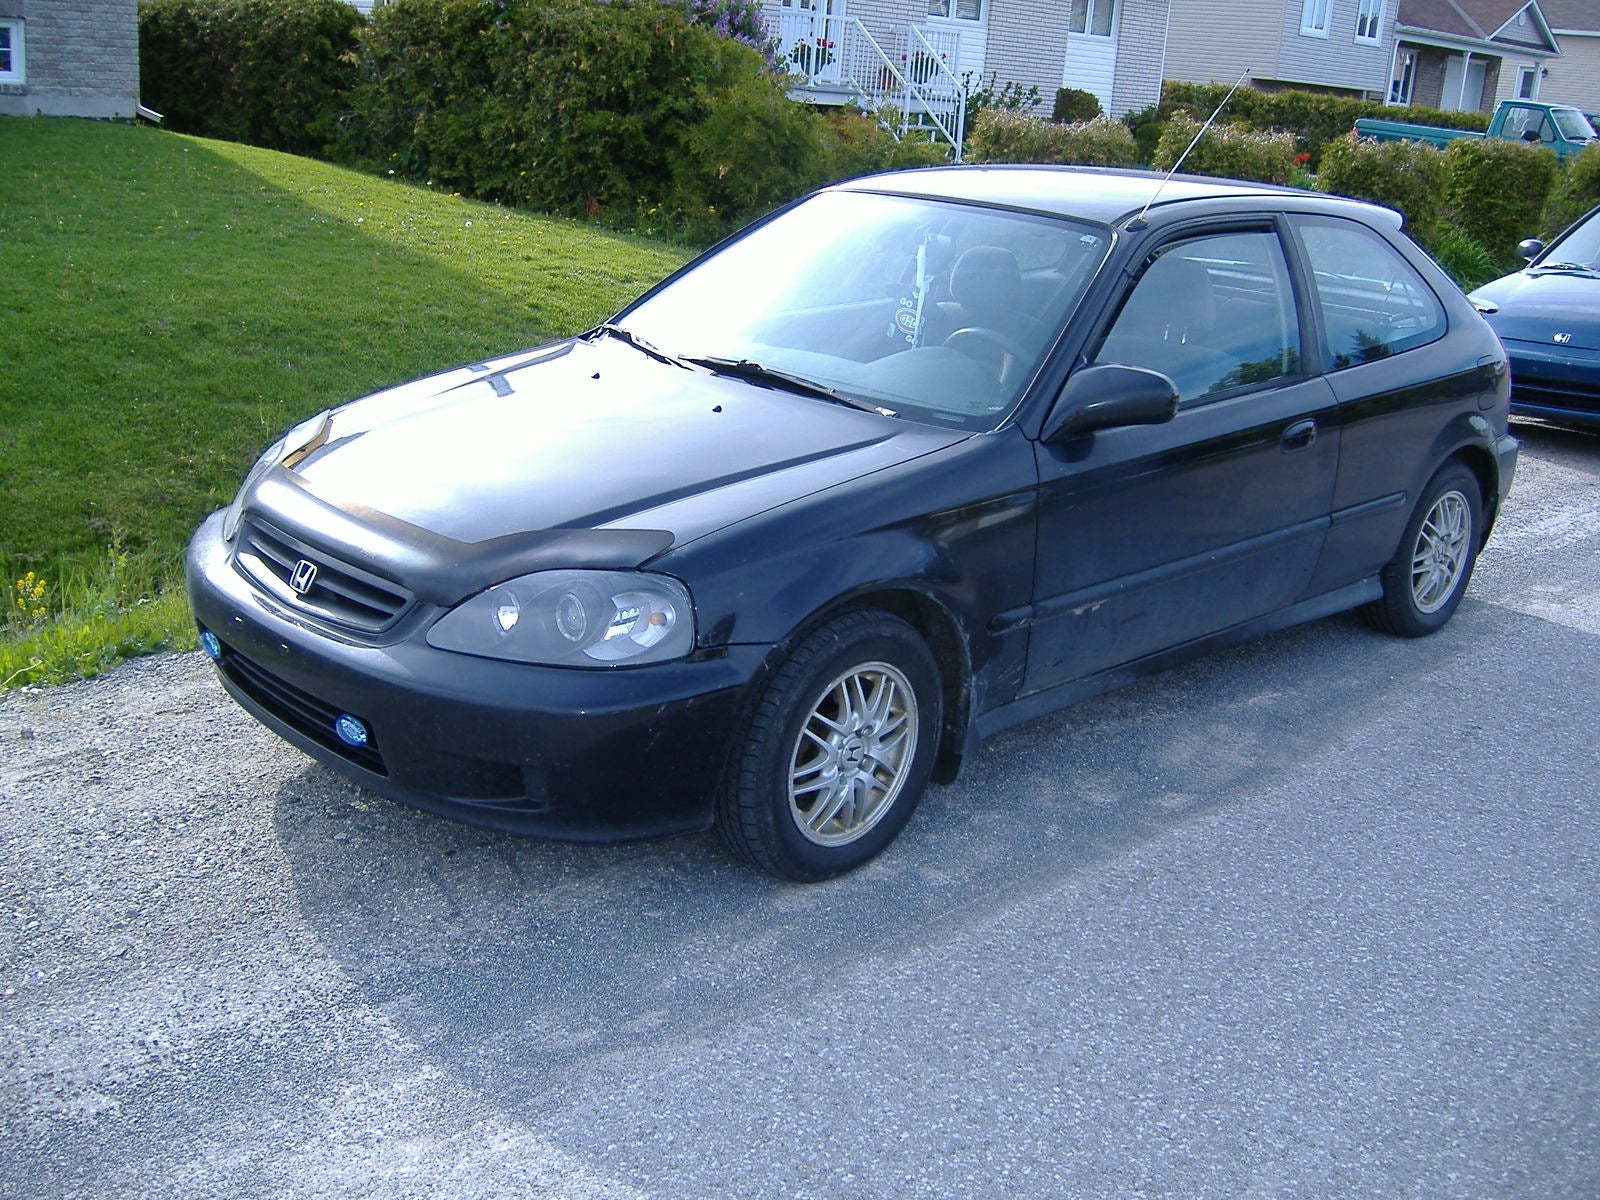 2000 Civic hatchback honda picture